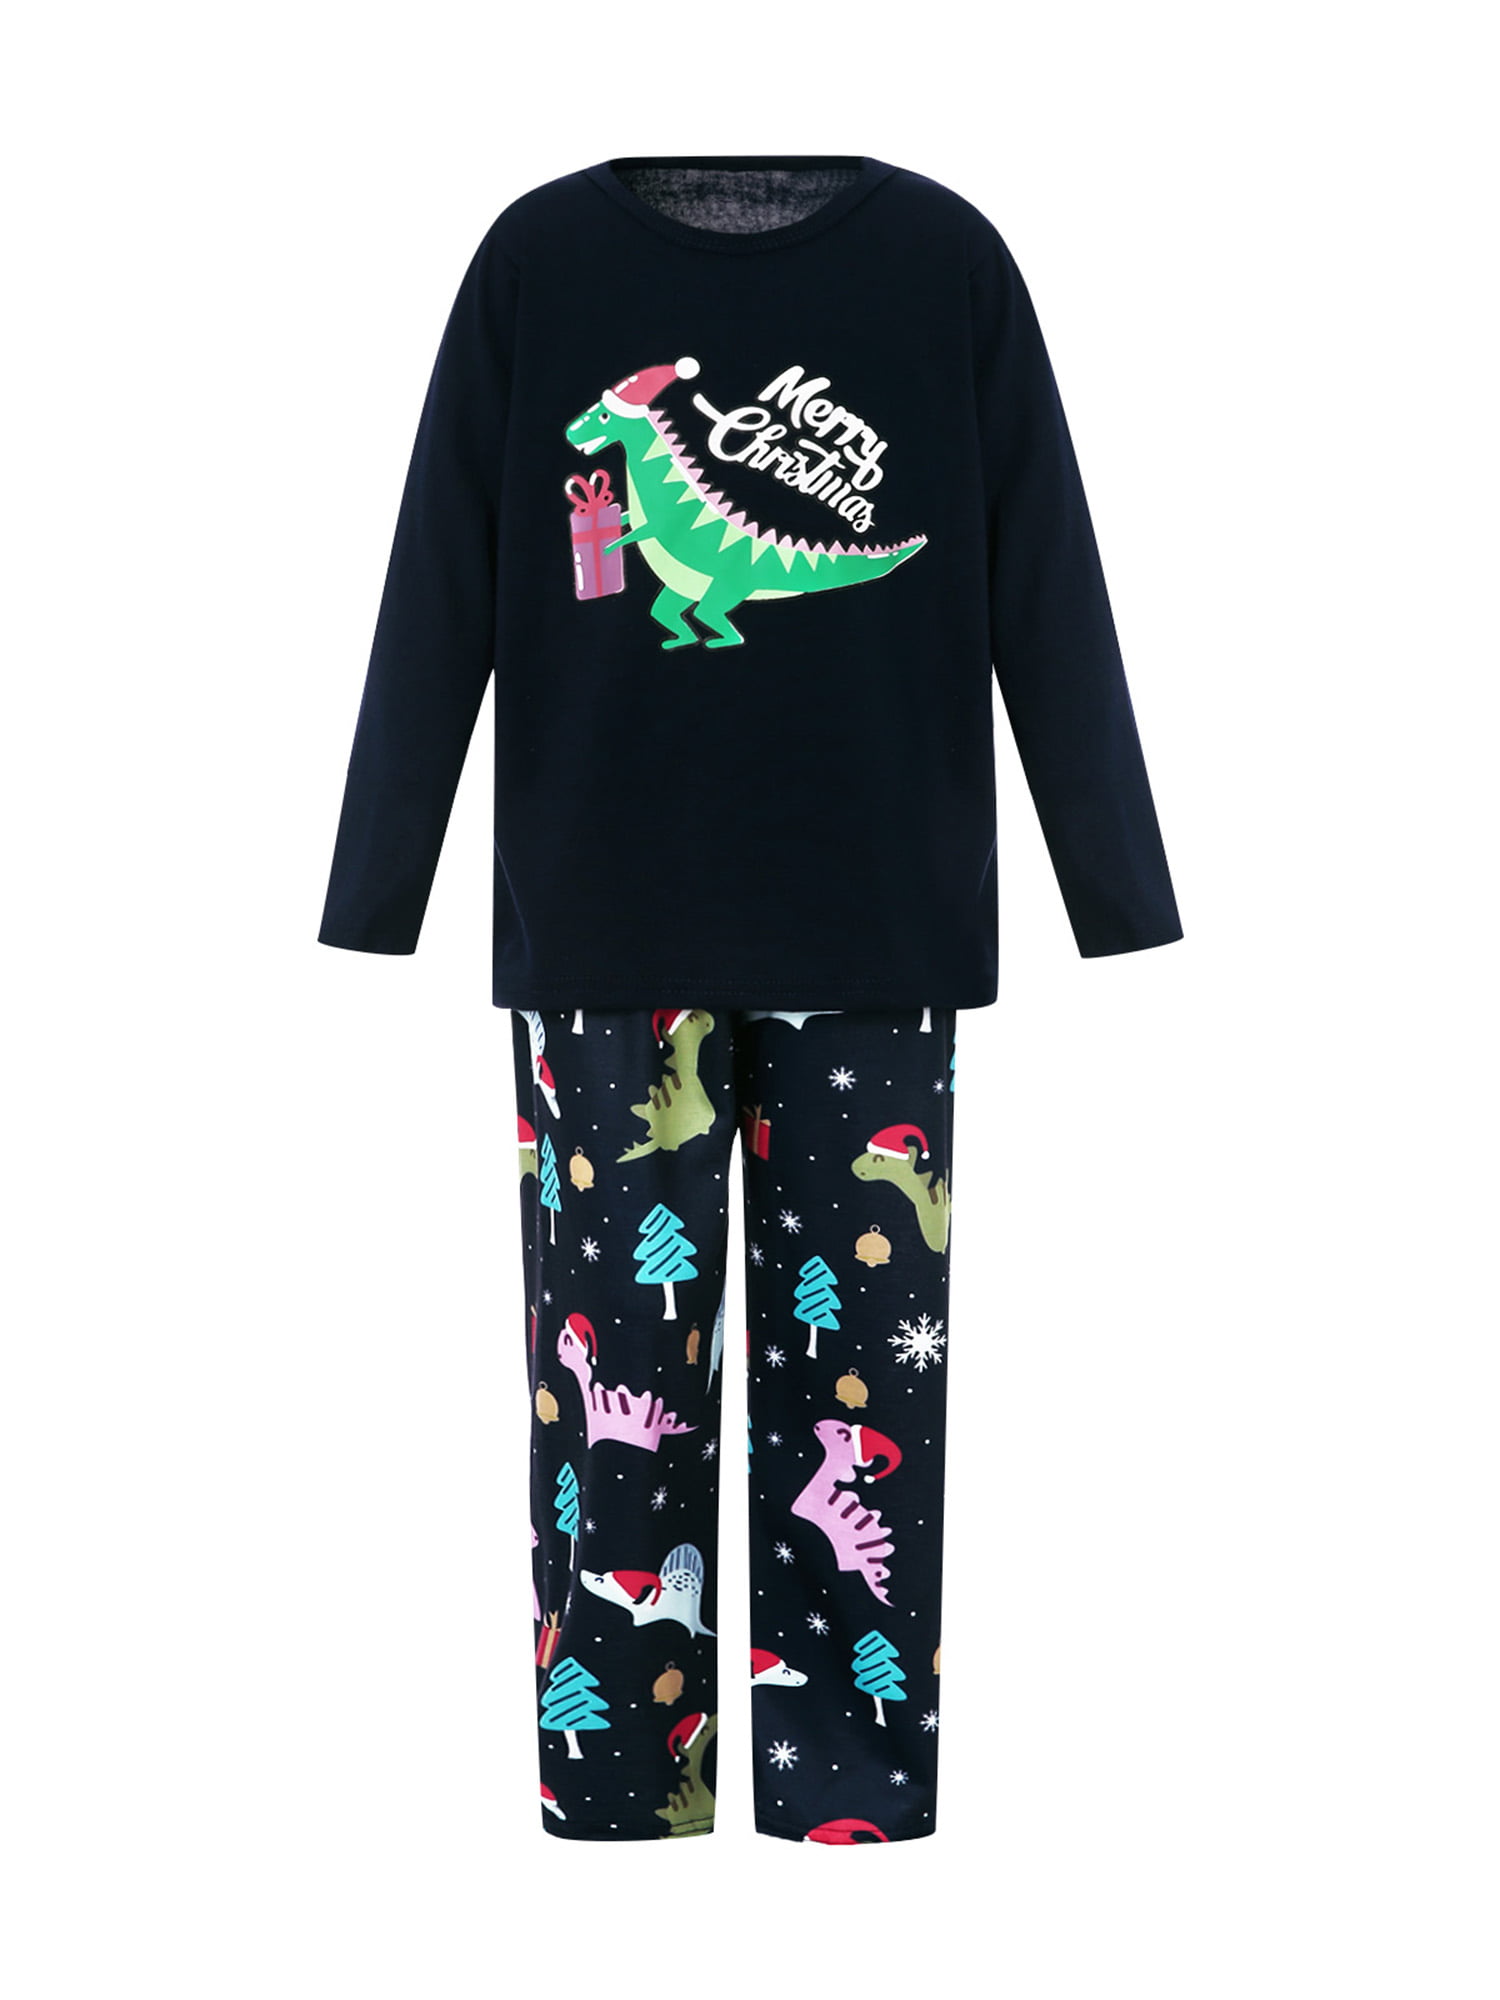 Primark Ladies Fleece SNOOZE Pyjamas Womens Girls Cosy Warm Winter PJ Sets 